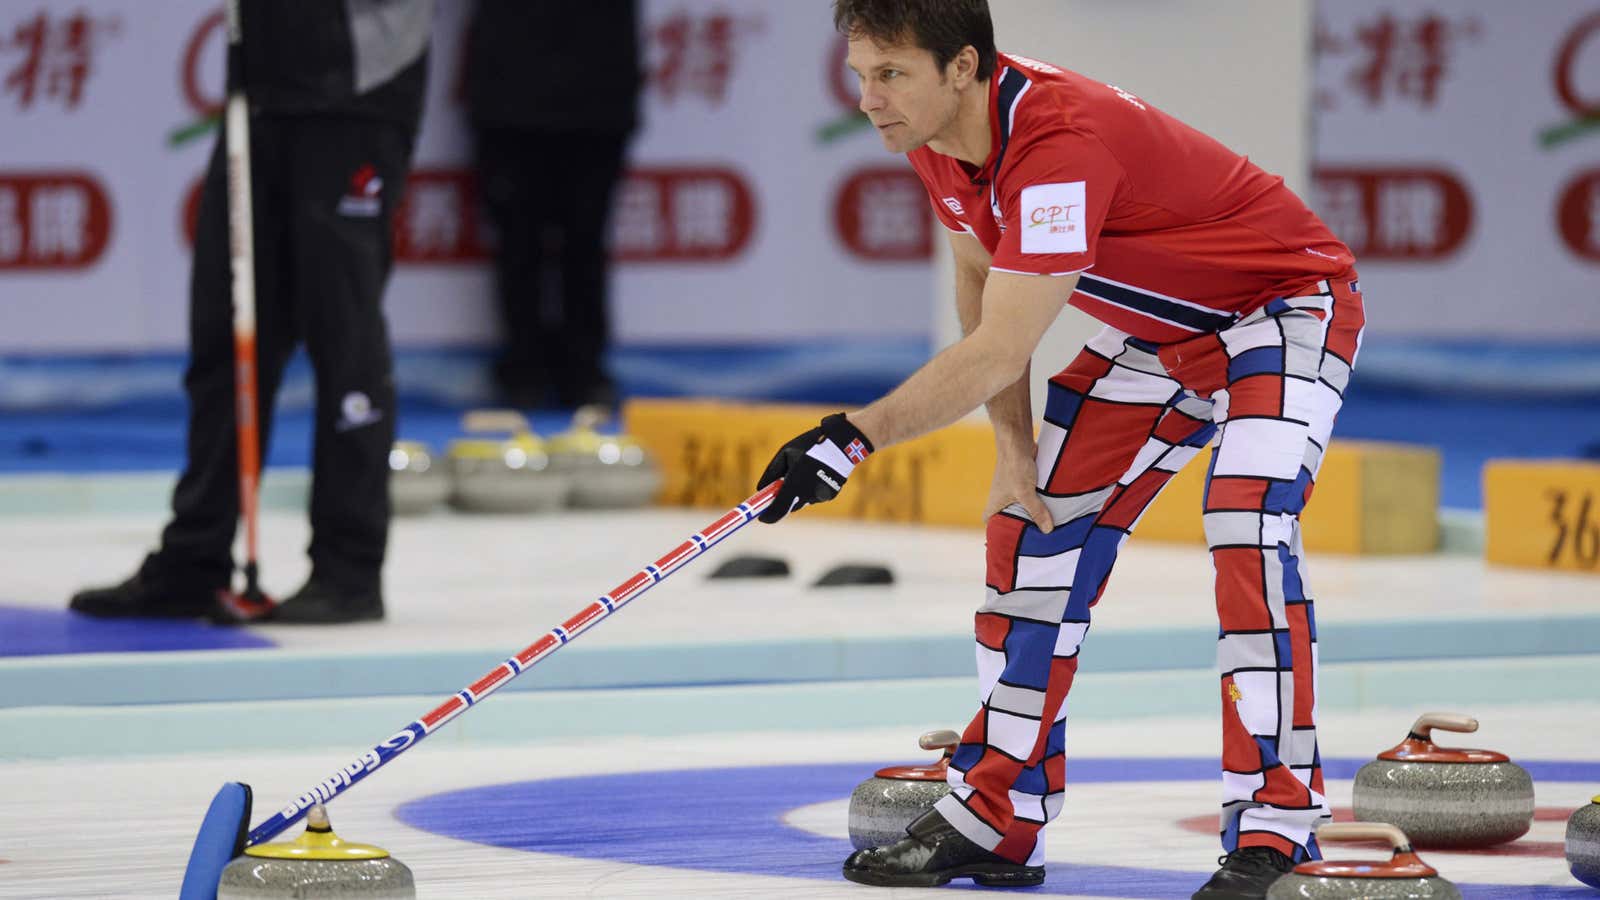 Scotland should adopt Norway’s curling uniforms too.